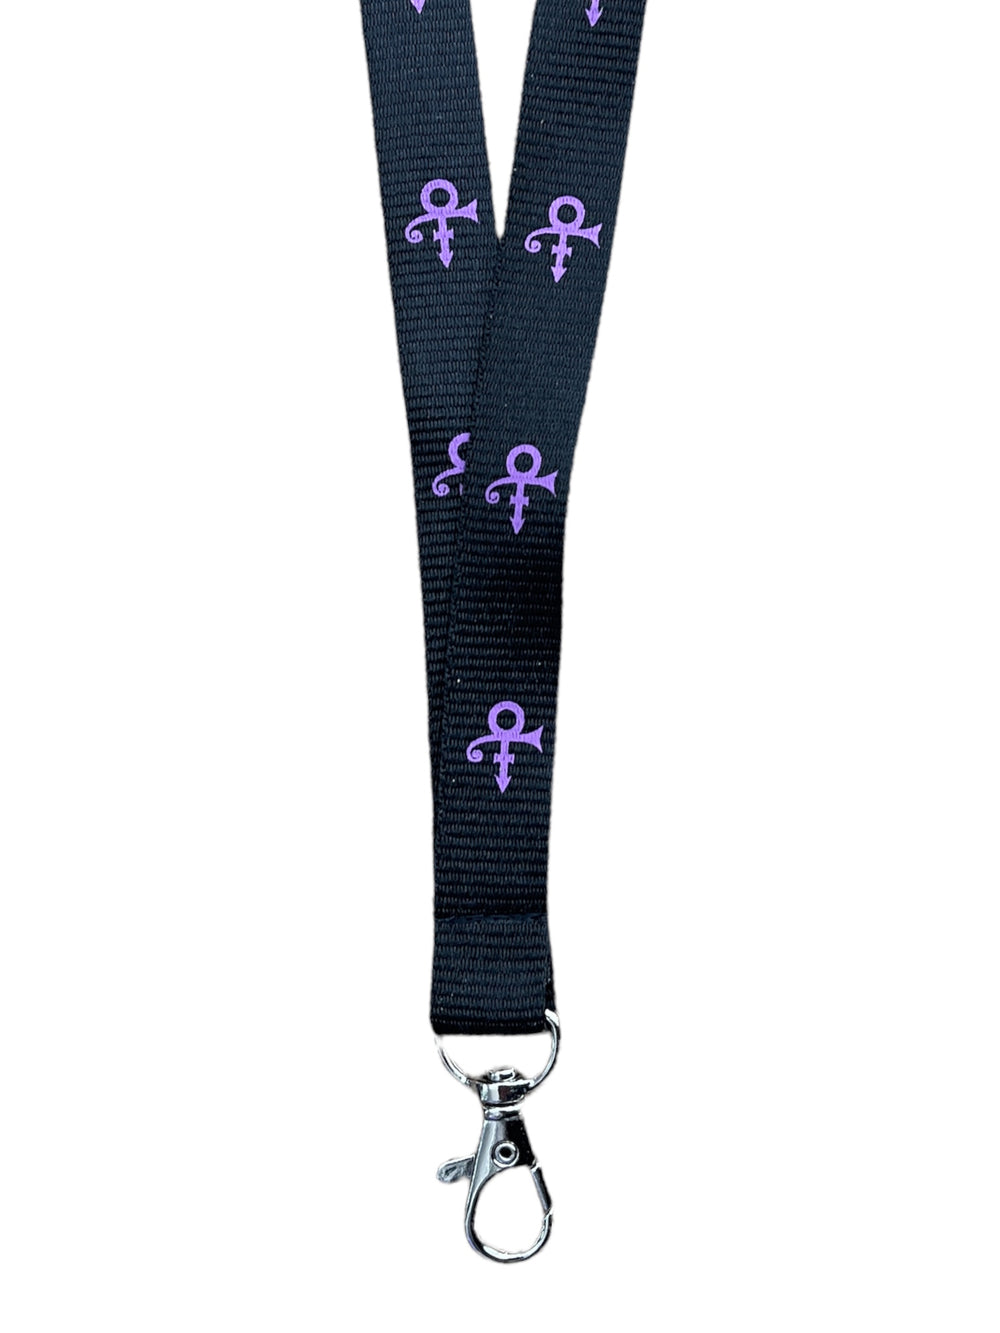 Prince – Official & Xclusive Purple Love Symbol Estate Authorised Lanyard